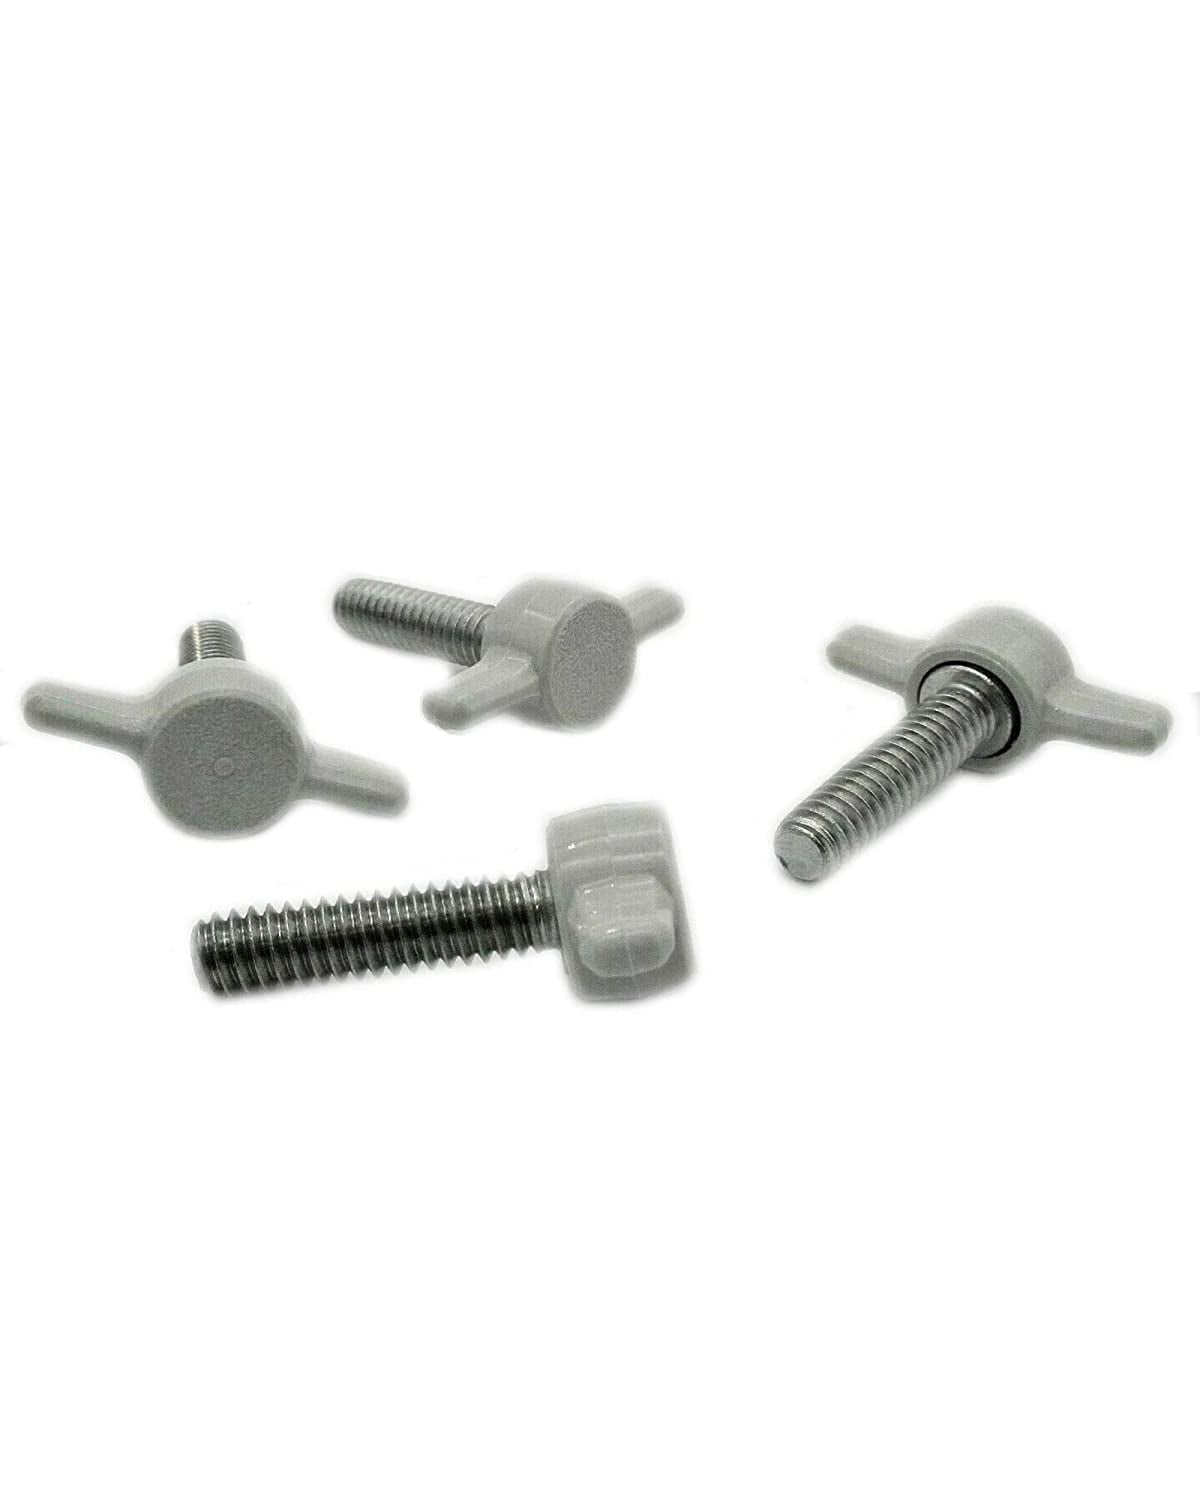 20 1”Black Plastic Knobs Thumb Screws Stainless Steel 1/4"-20 x 1/2" Length 